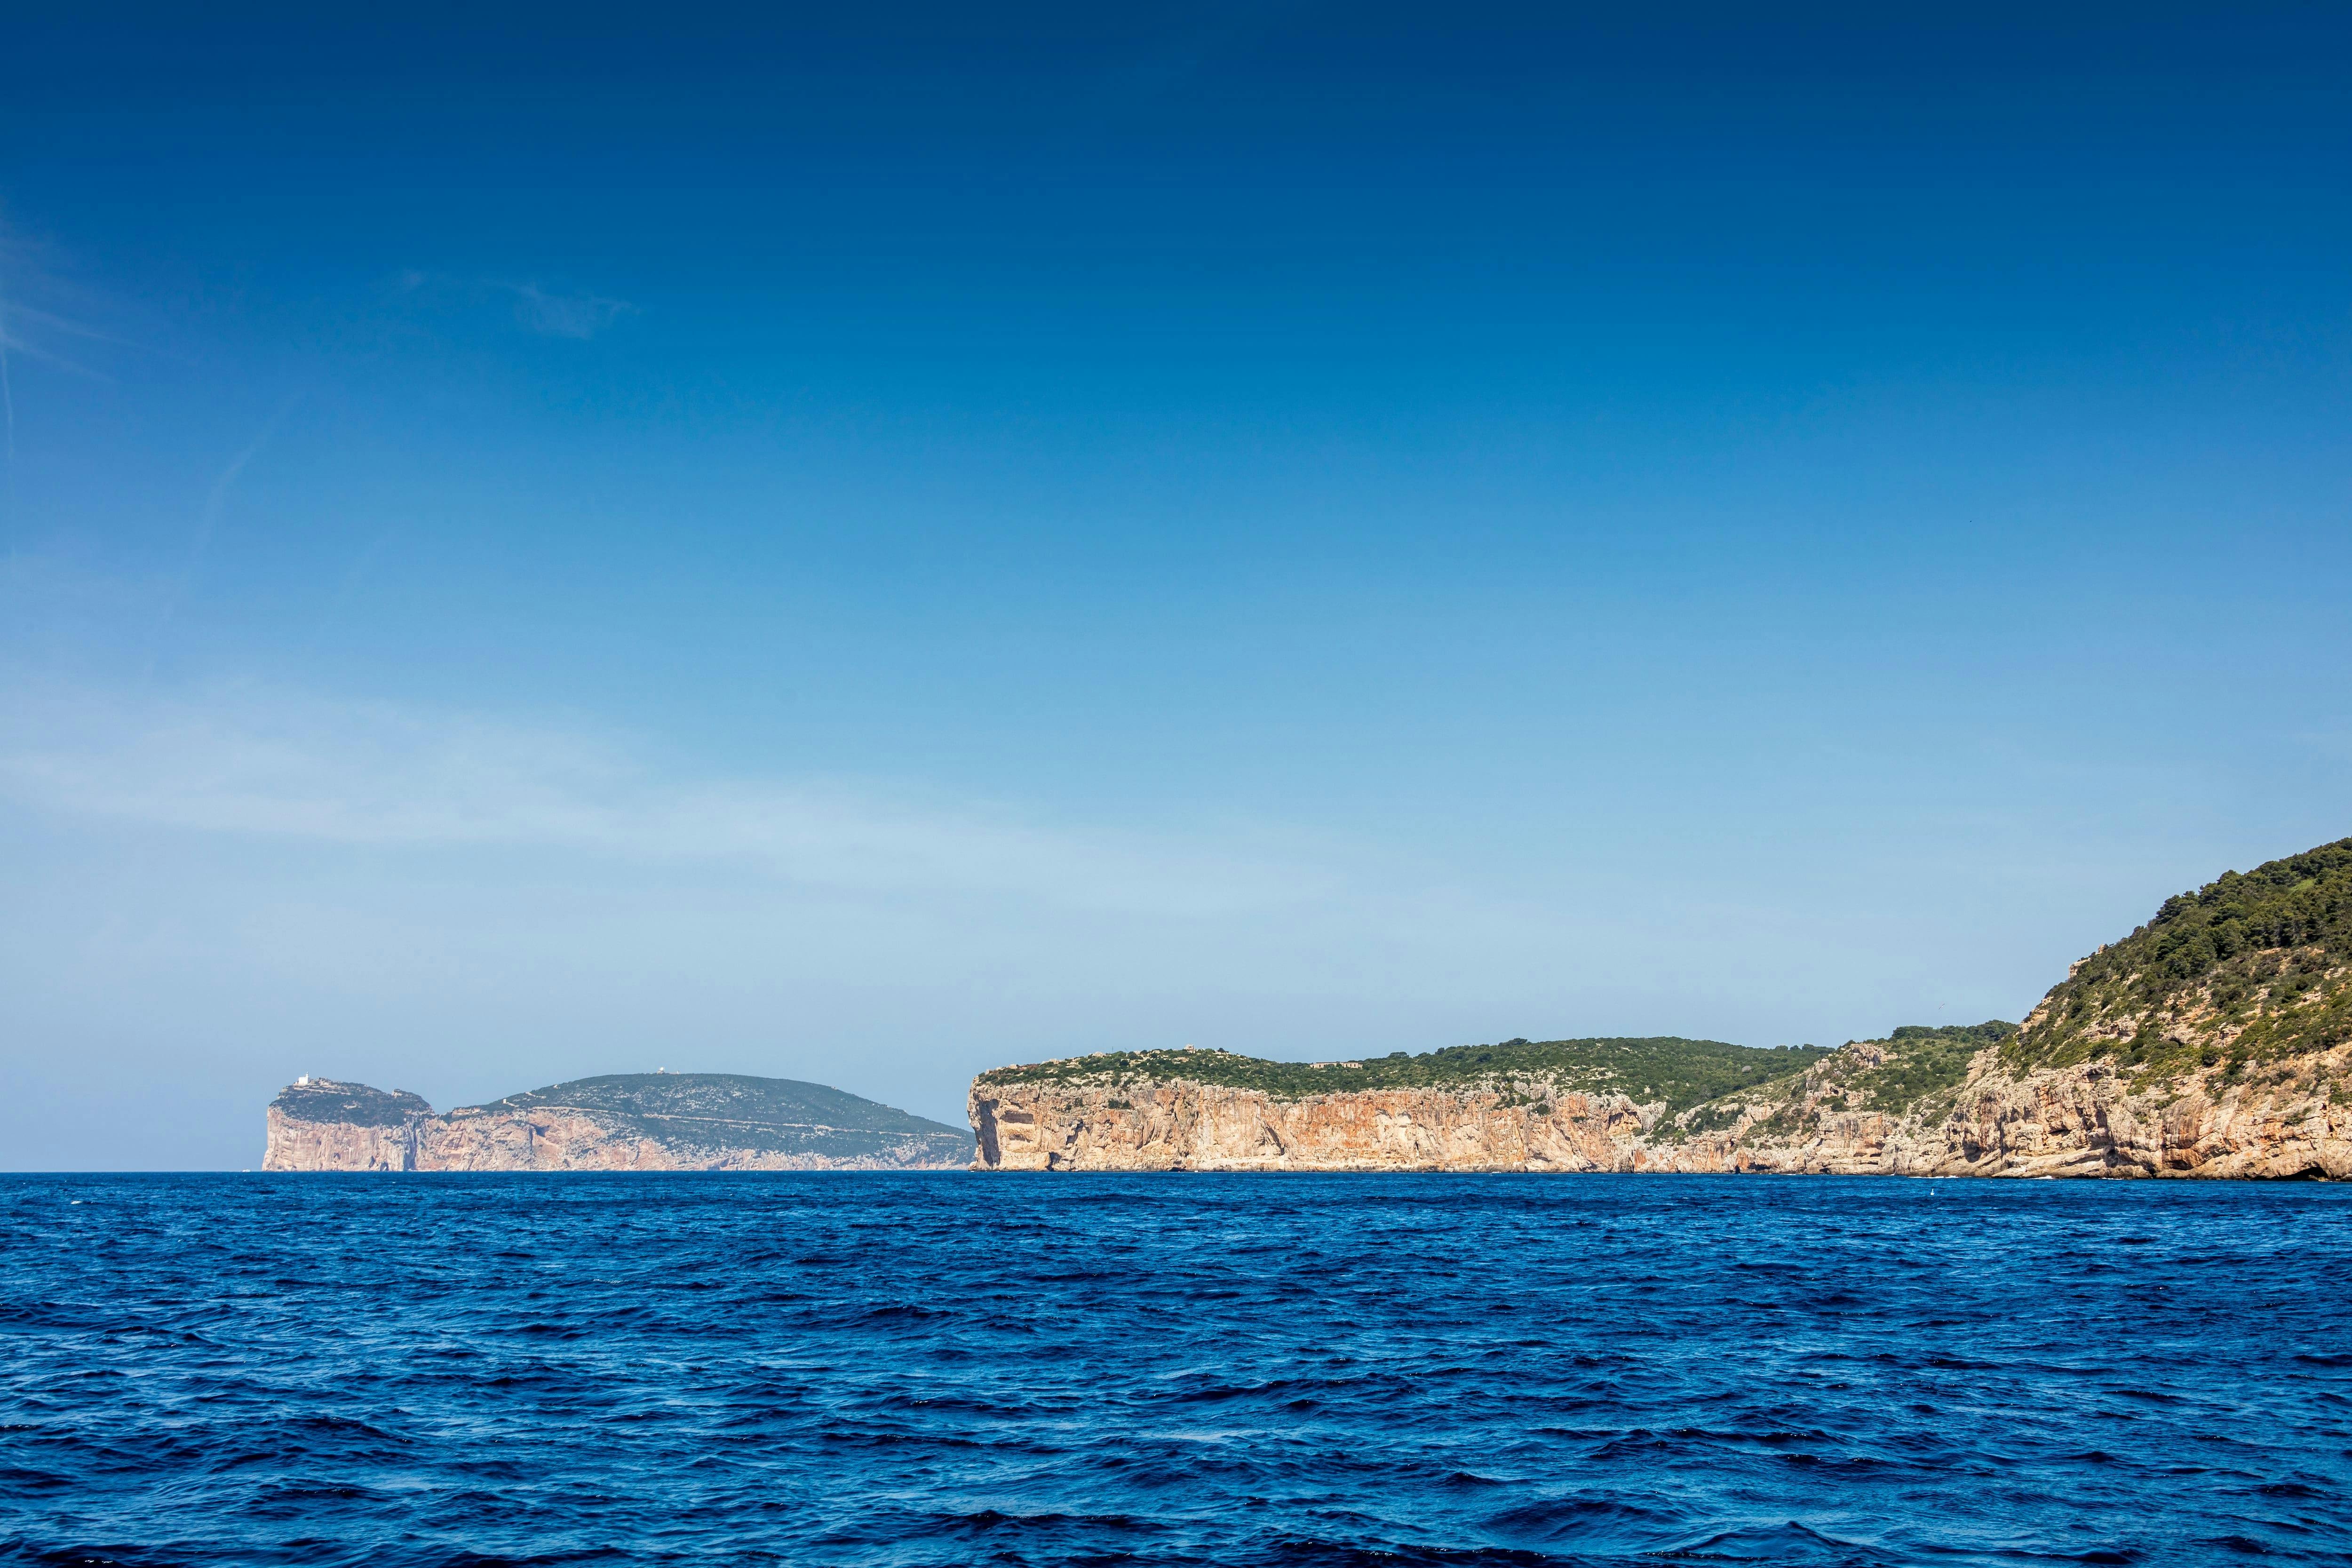 Sardinia Dolphin Watching Boat Cruise